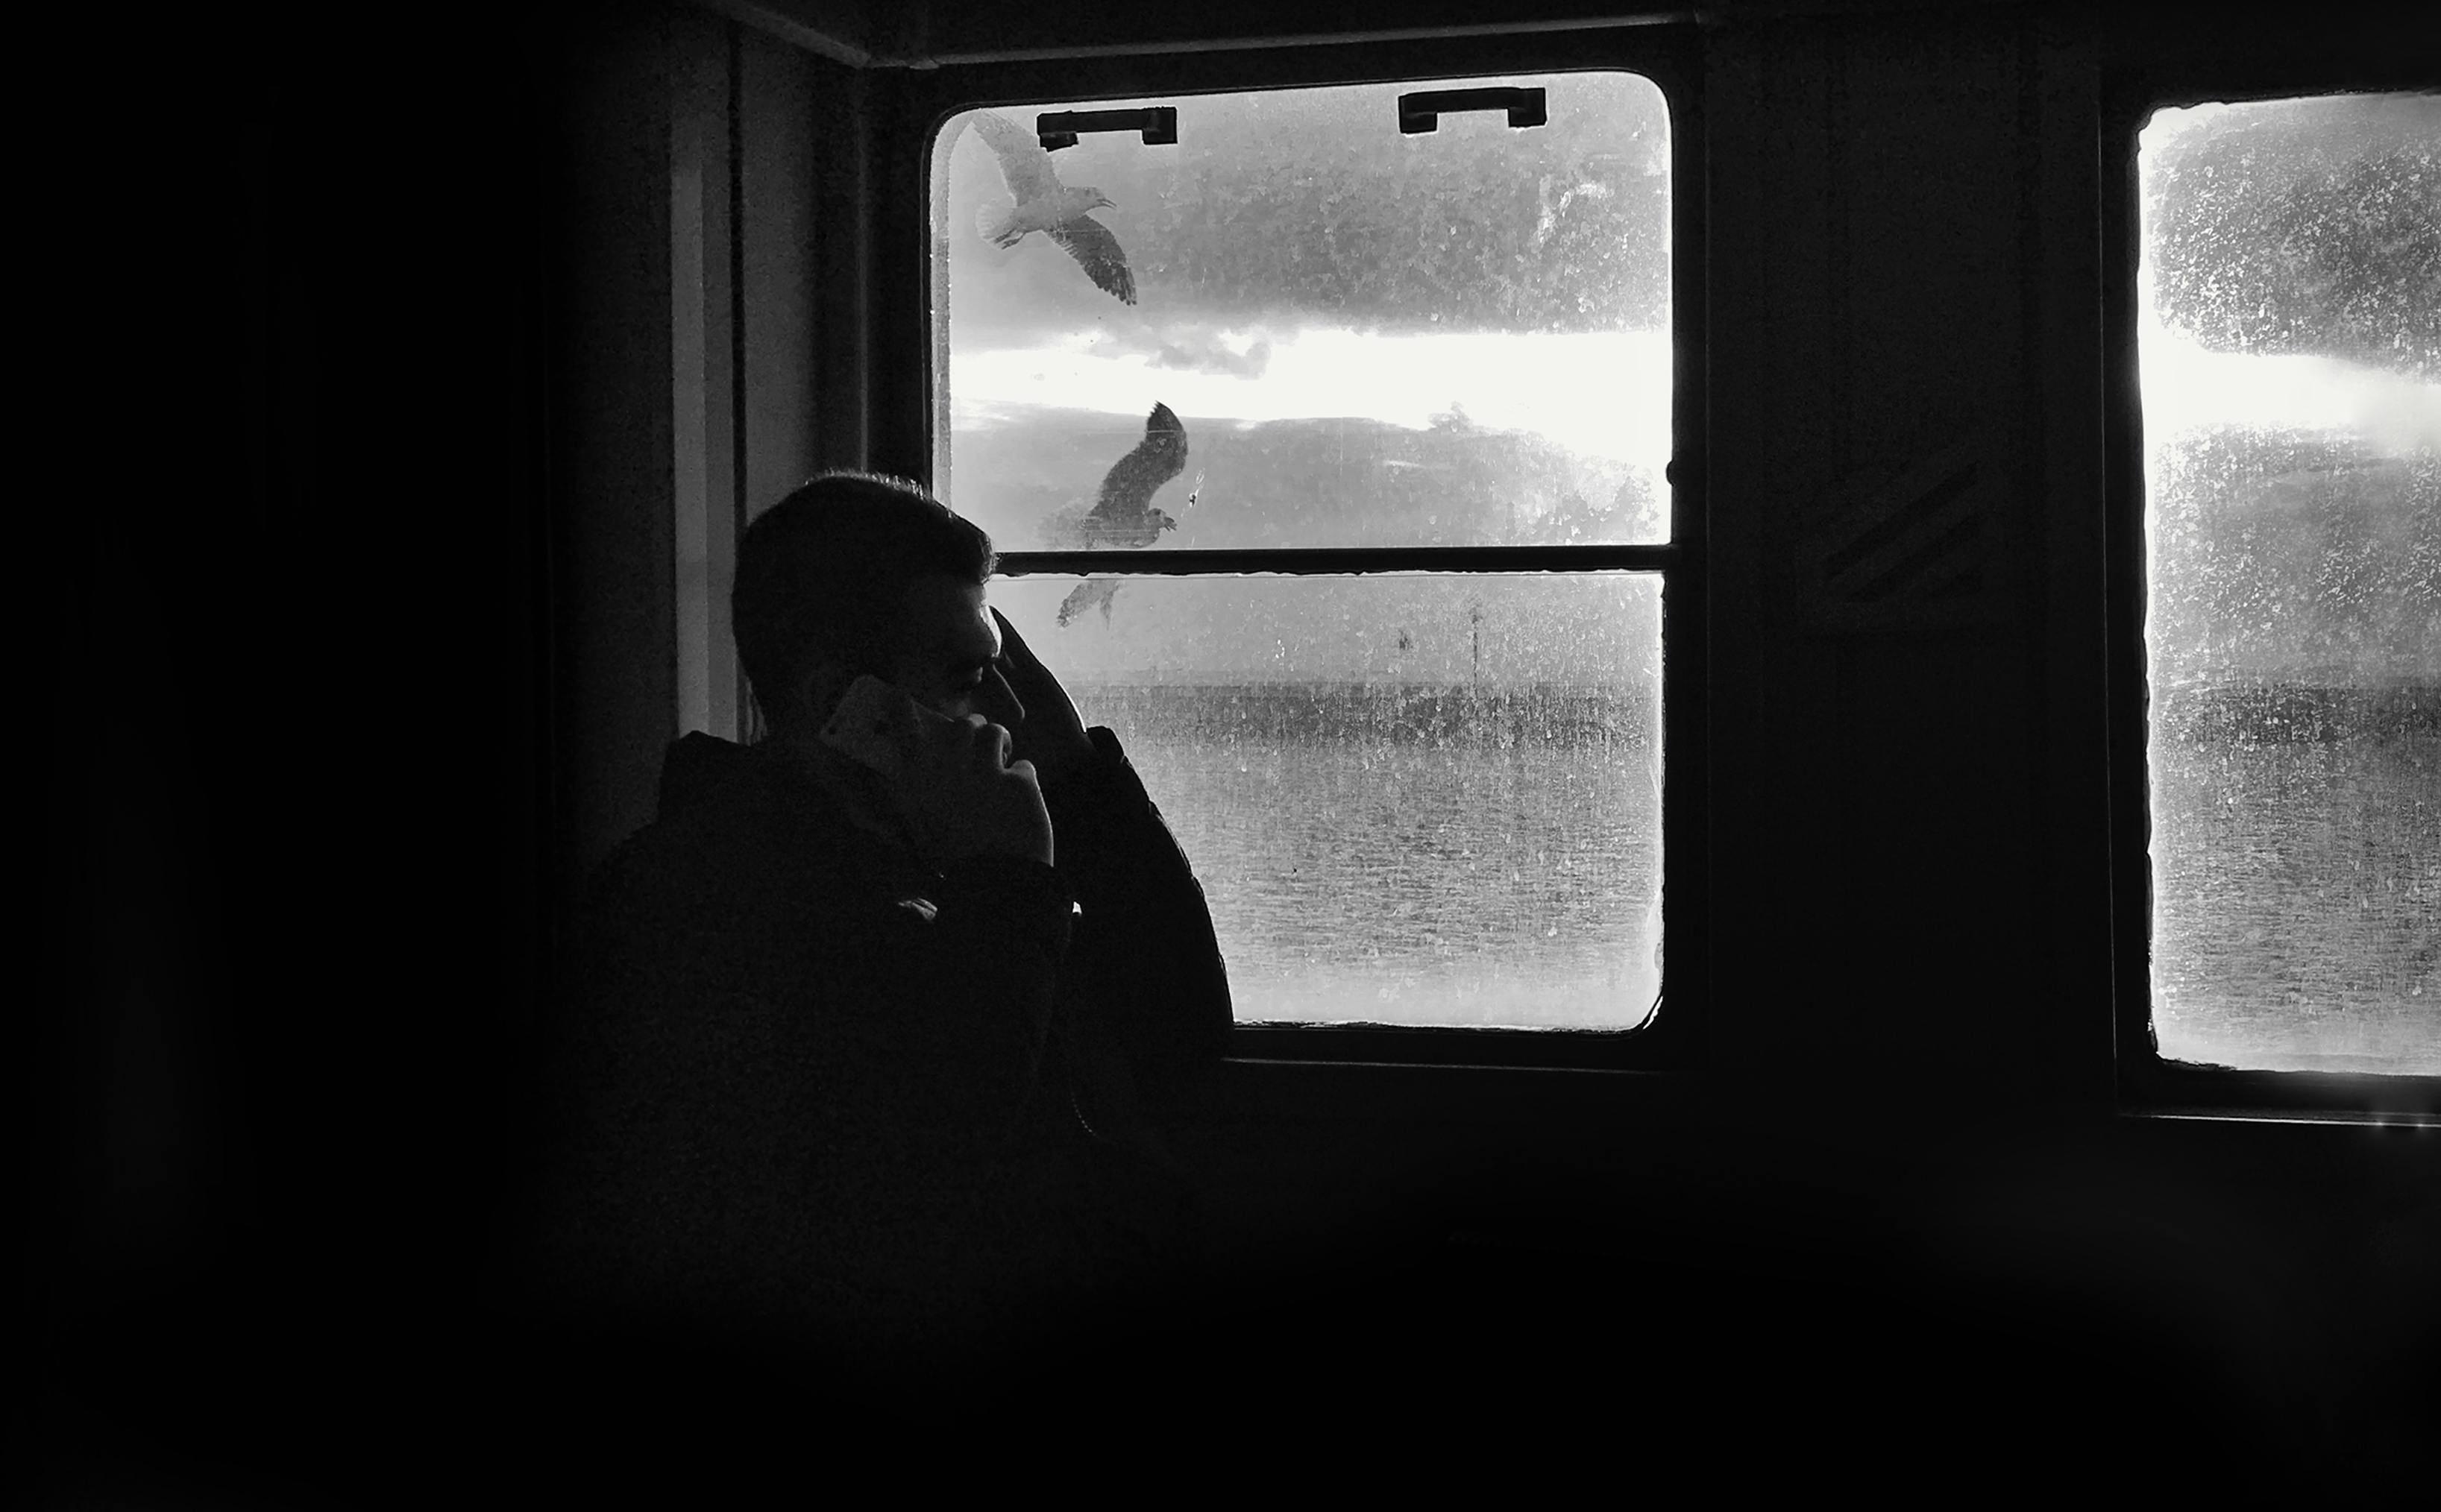 HD wallpaper: Greyscale Photo of Man Looking Through Window, black